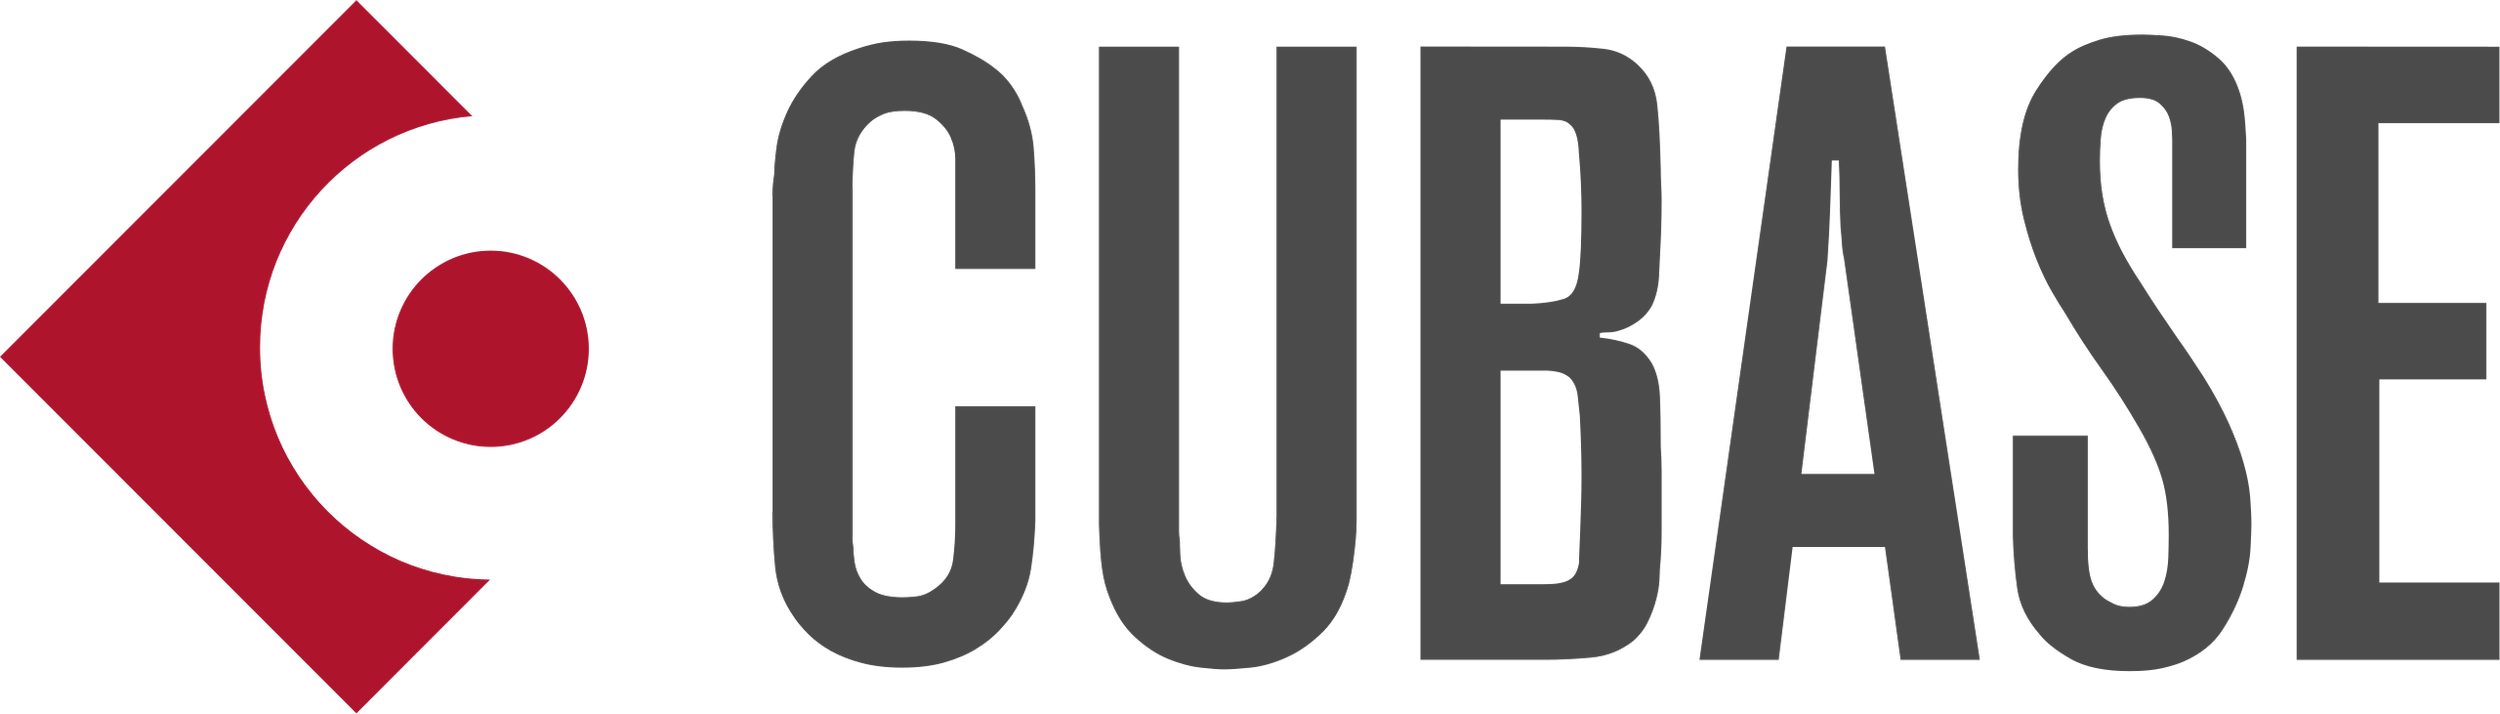 Cubase_logo.png